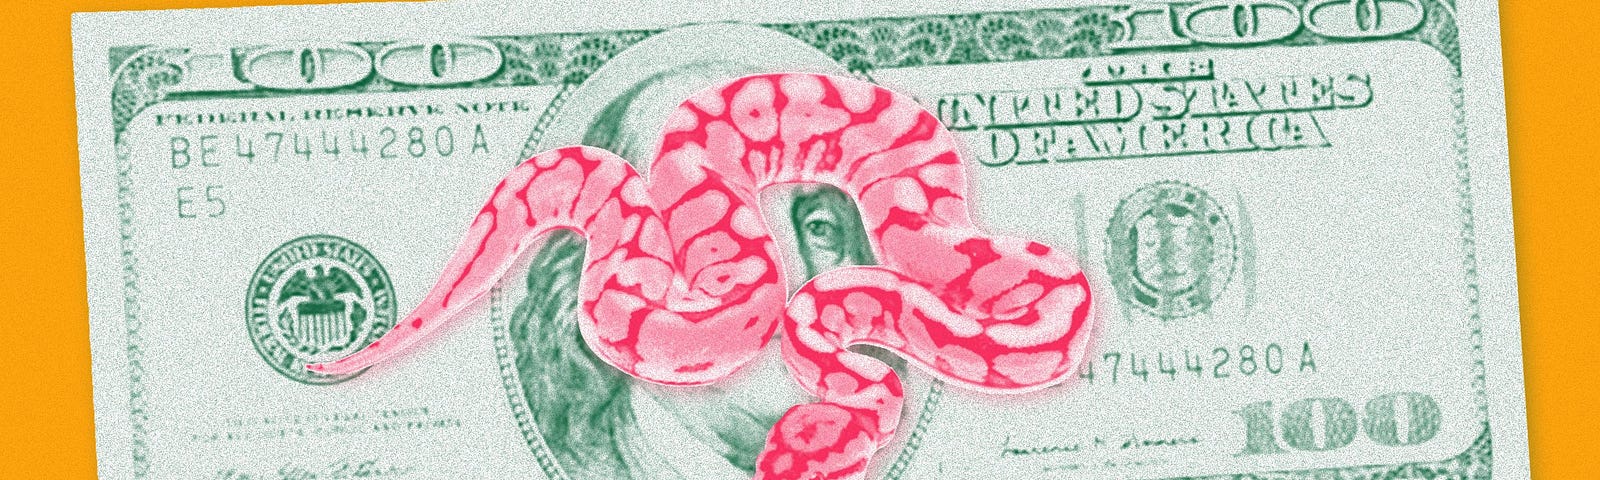 A photo treatment of a snake against a 100 dollar bill.